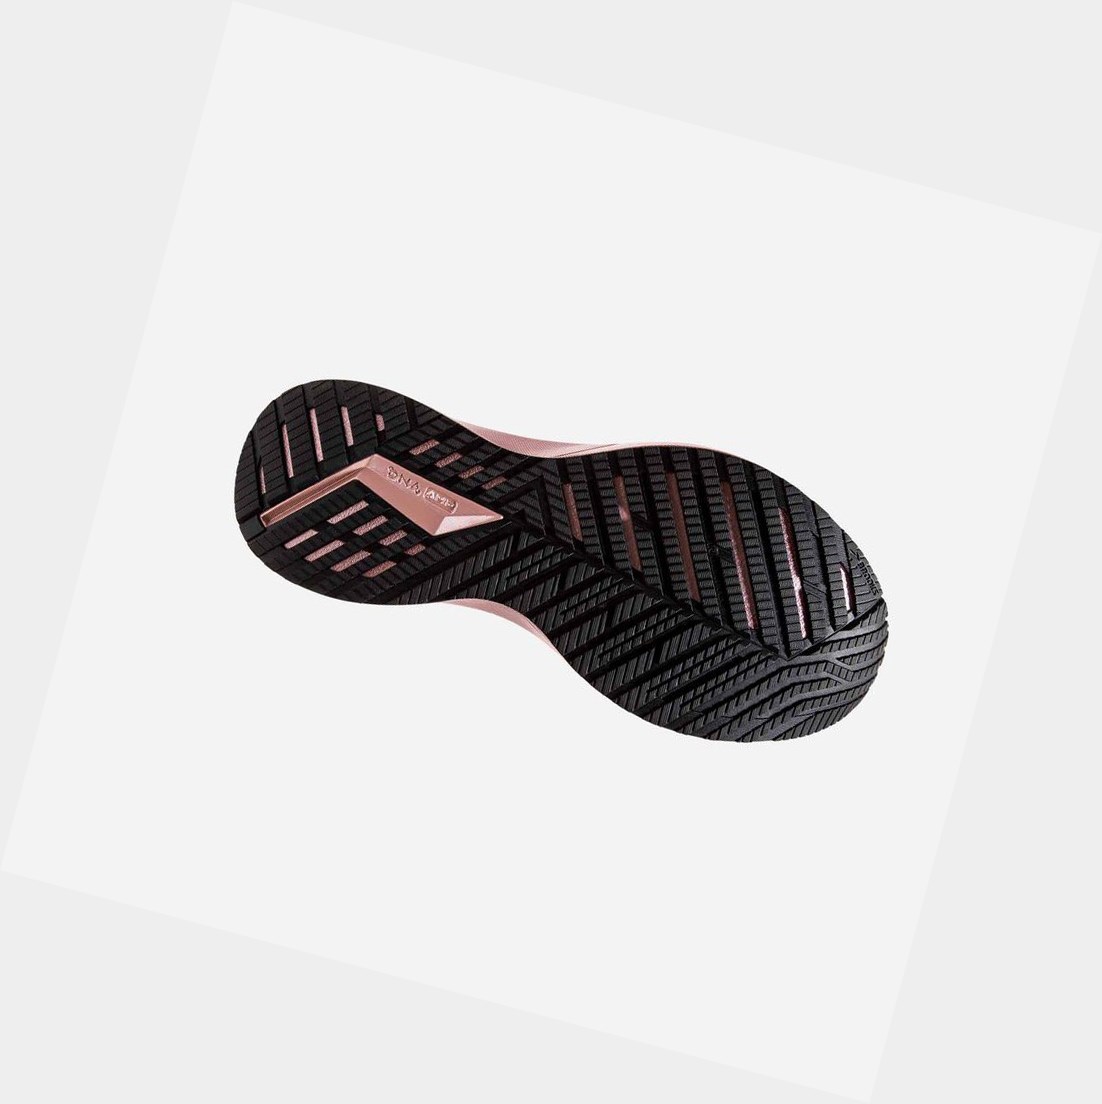 Brooks Levitate 4 Women's Road Running Shoes Black / Ebony / Rose Gold | BYOL-76401